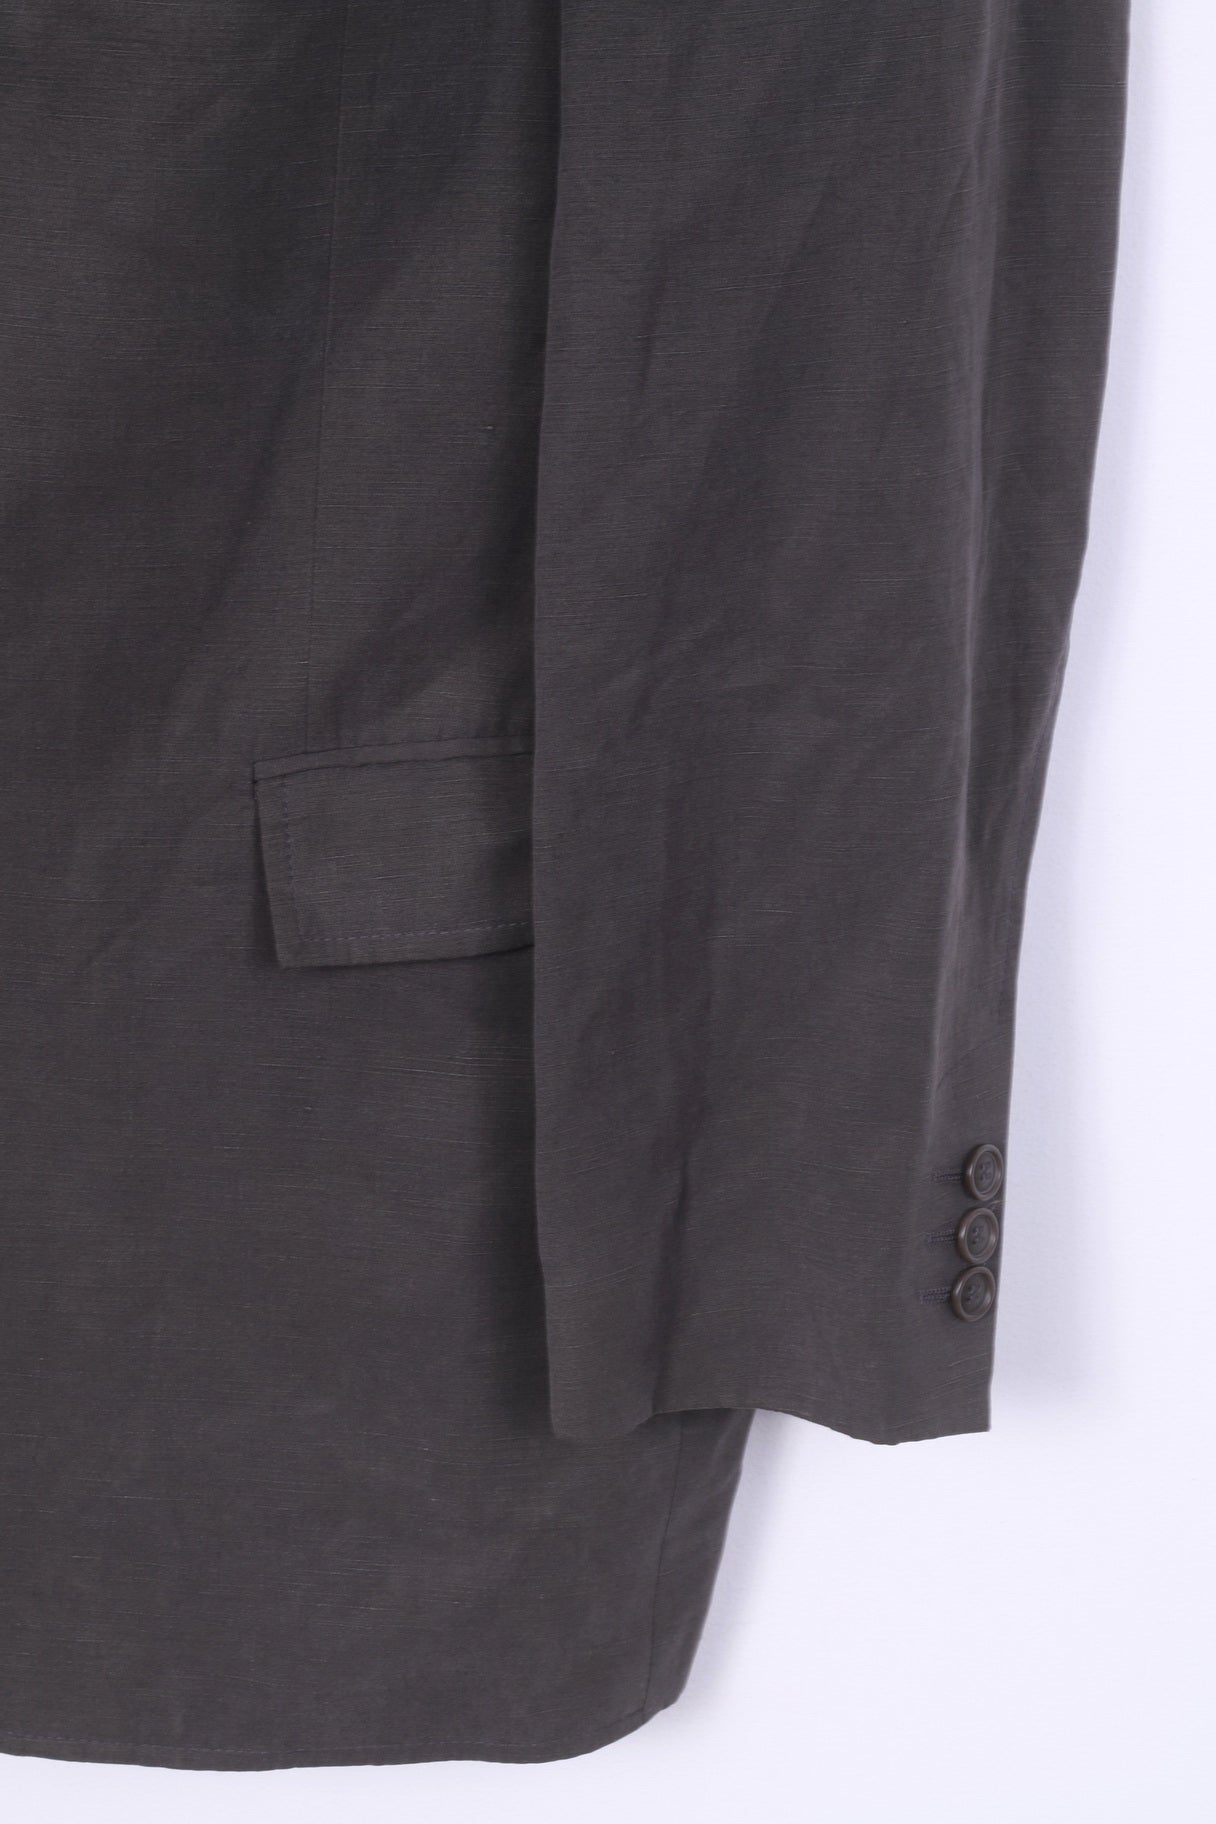 Pierre Cardin Mens 42 M Blazer Jacket Grey Single Breasted Shoulder Pads